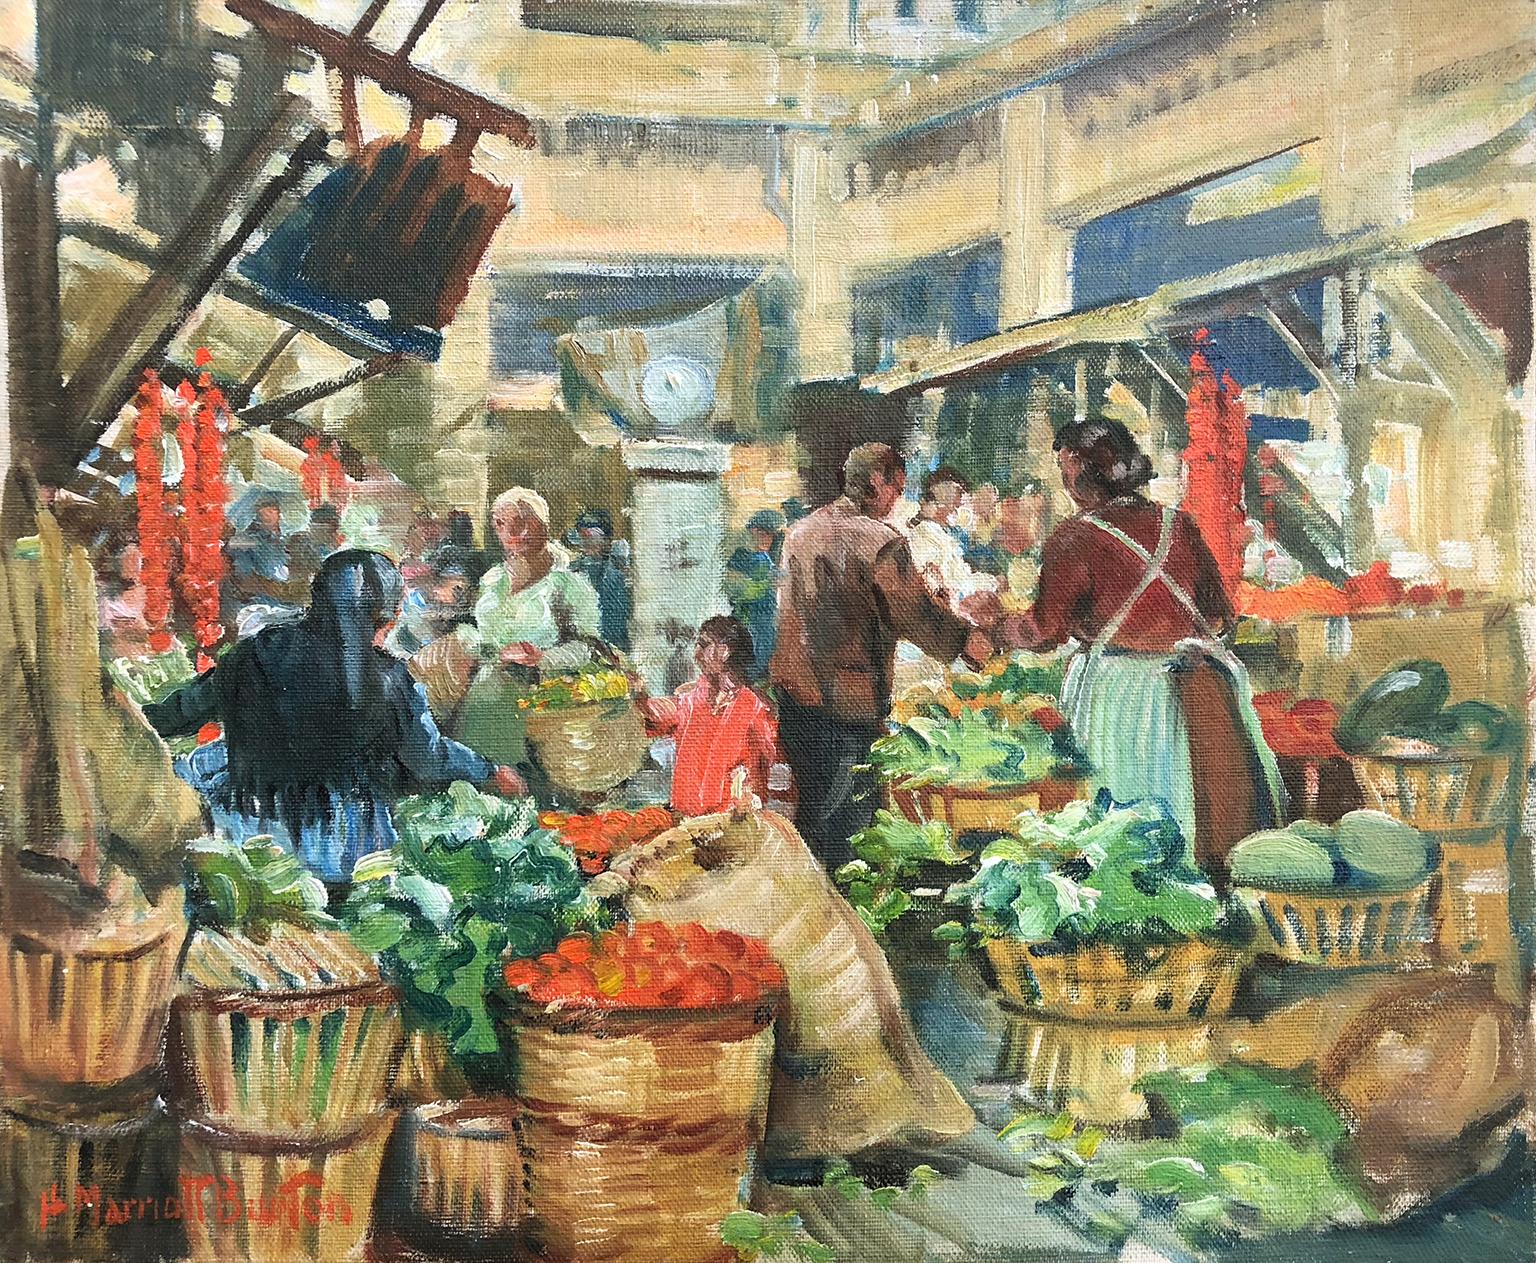 Harry Marriott-Burton Interior Painting - Market Scene - Mercado de Santa Catalina, Palma, Spain (December 1957)